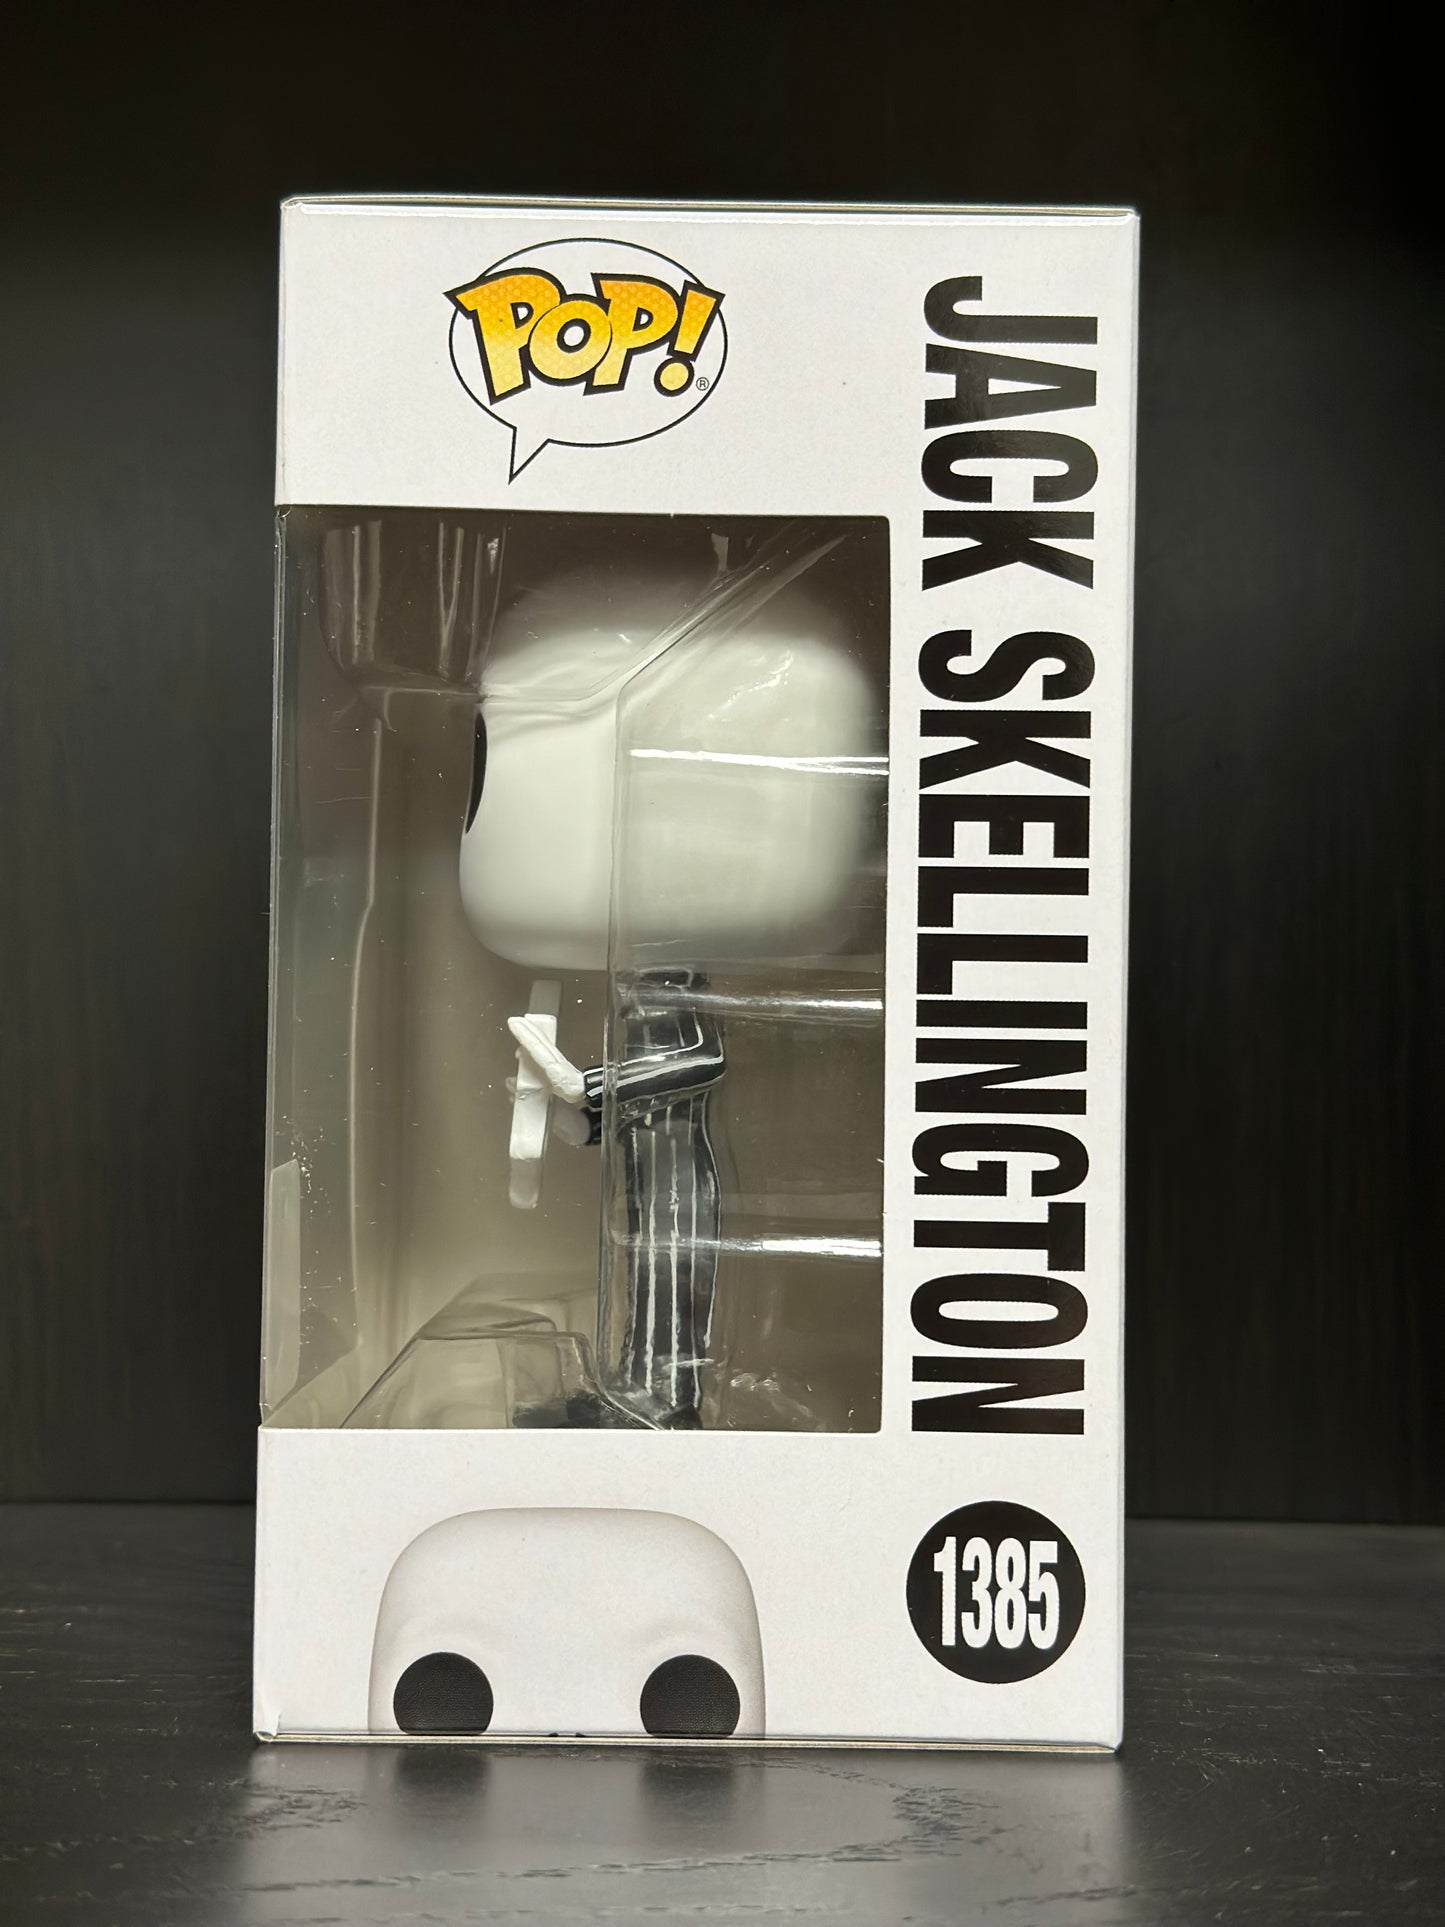 #1385 Funko POP! Disney - Jack Skellington with Snowflake [Funko Specialty Series Exclusive]